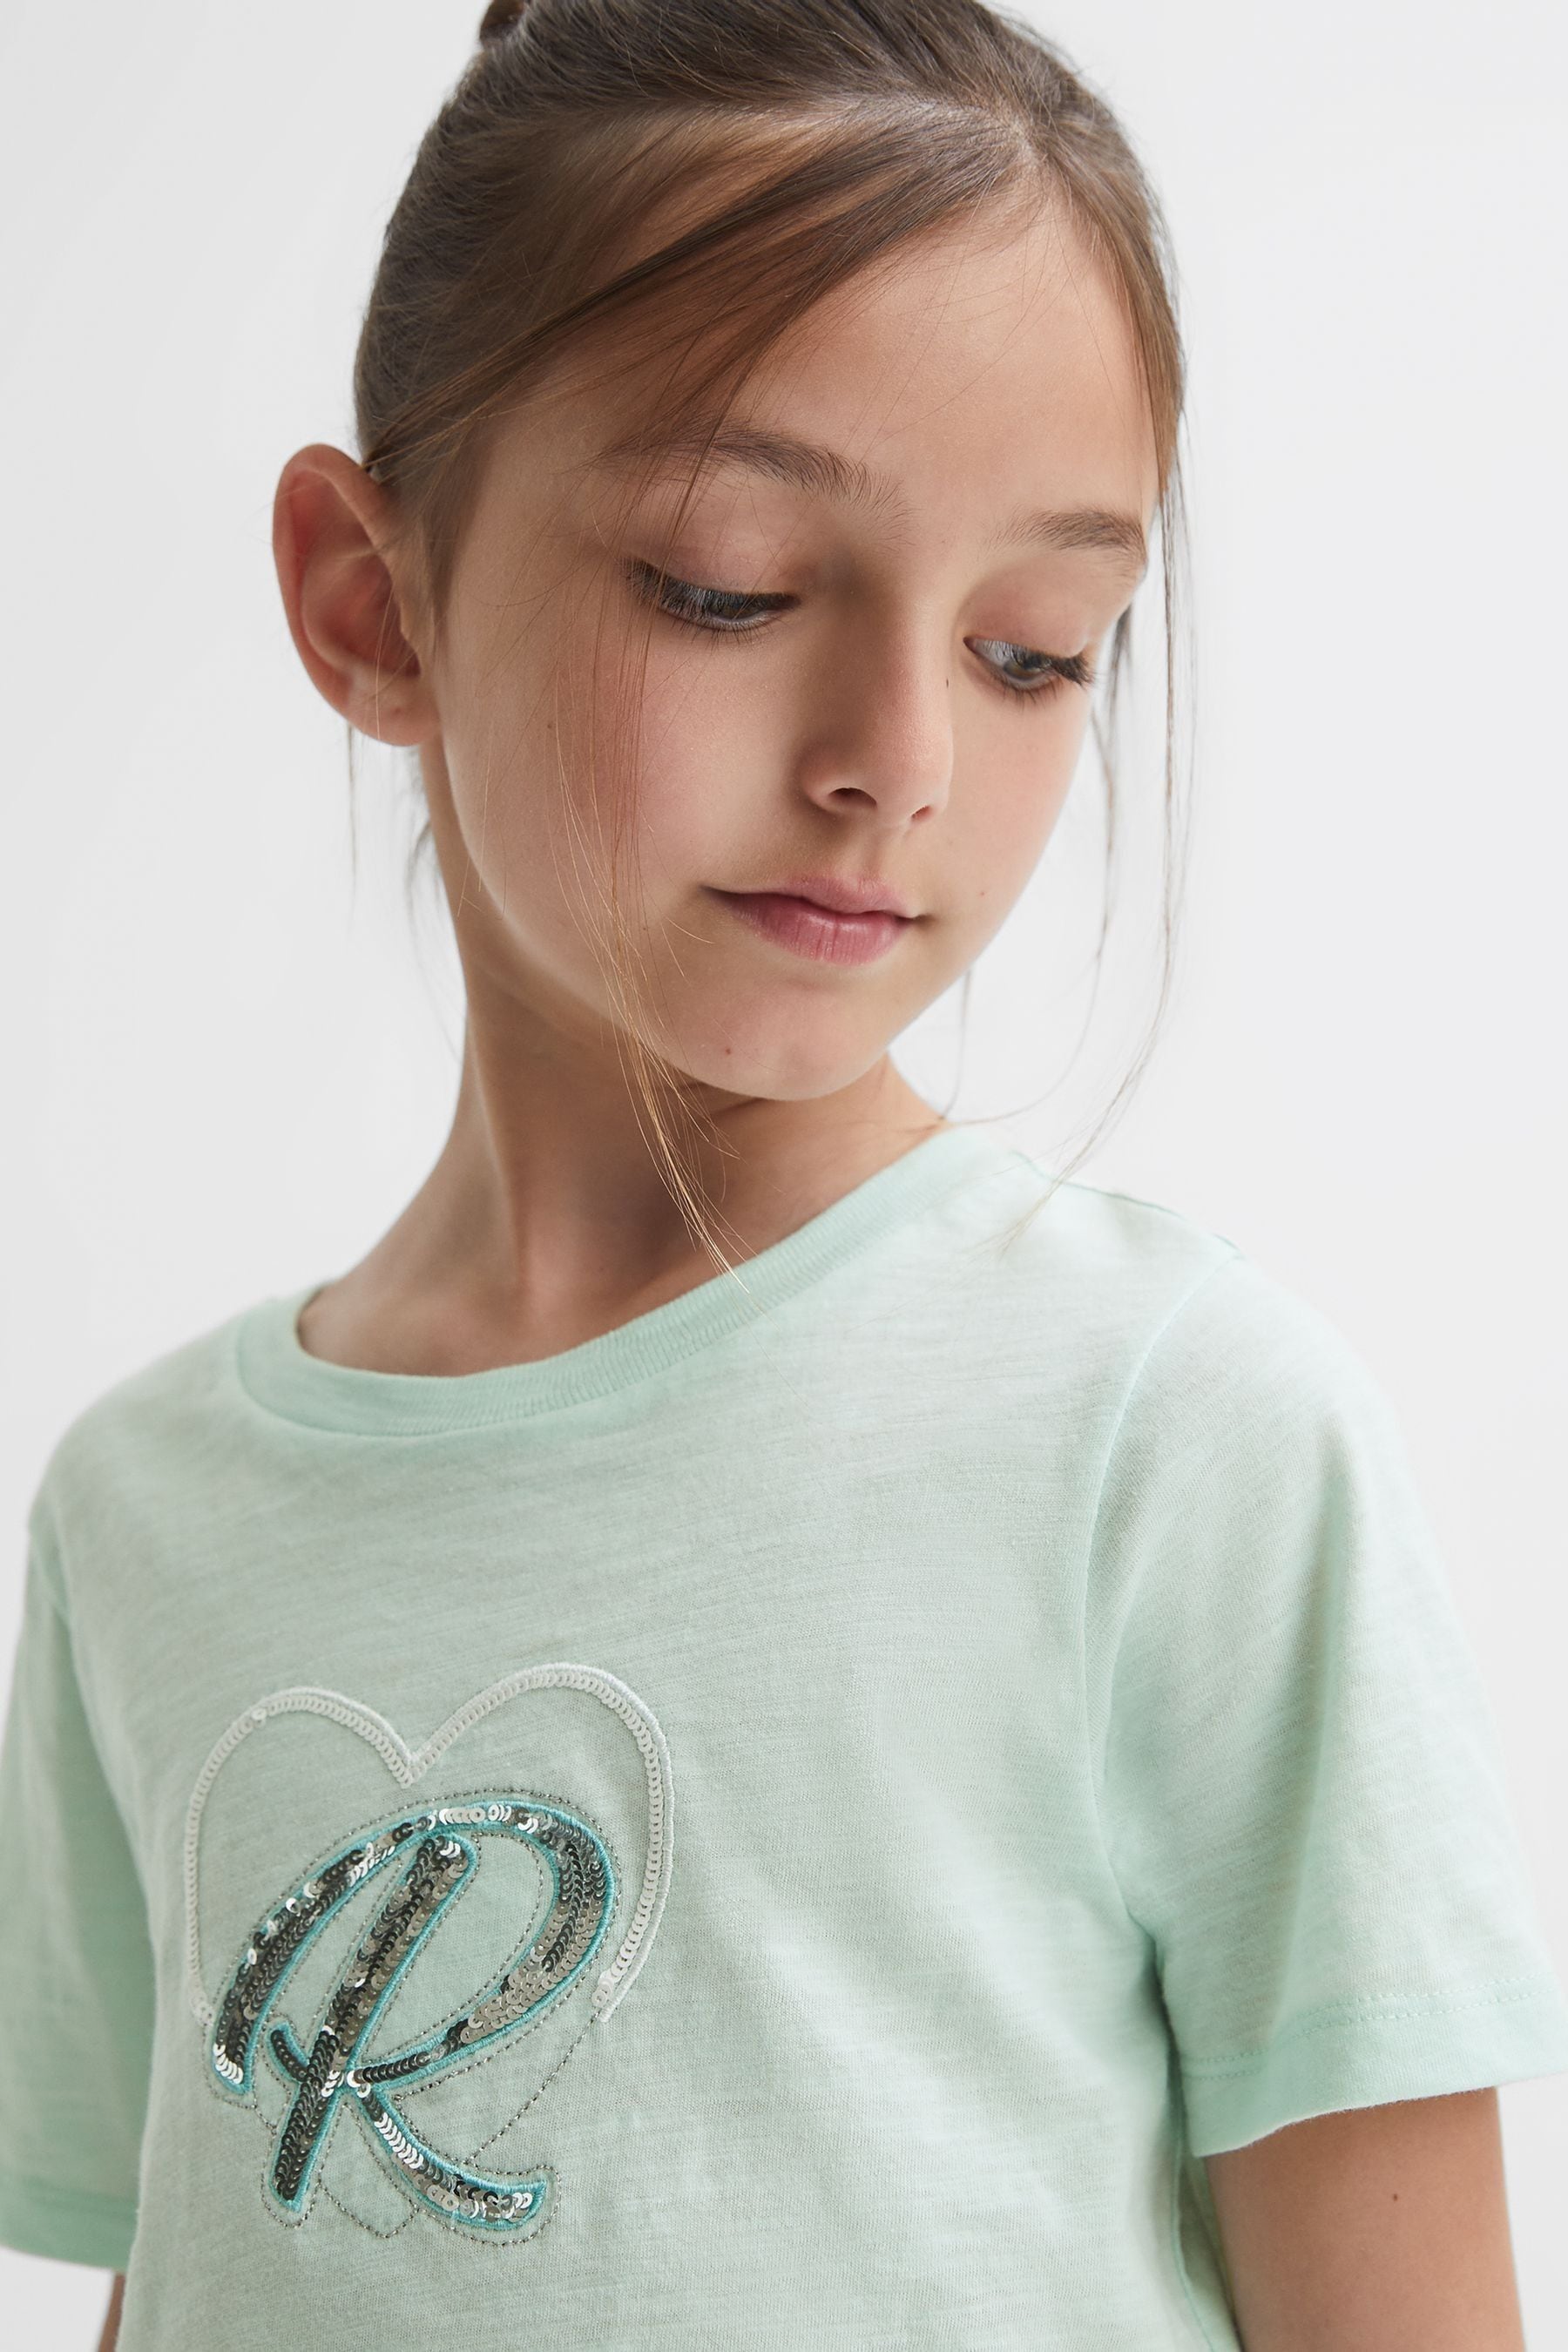 Reiss Kids' Swift - Sage Junior Embellished Crew Neck T-shirt, Age 5-6 Years